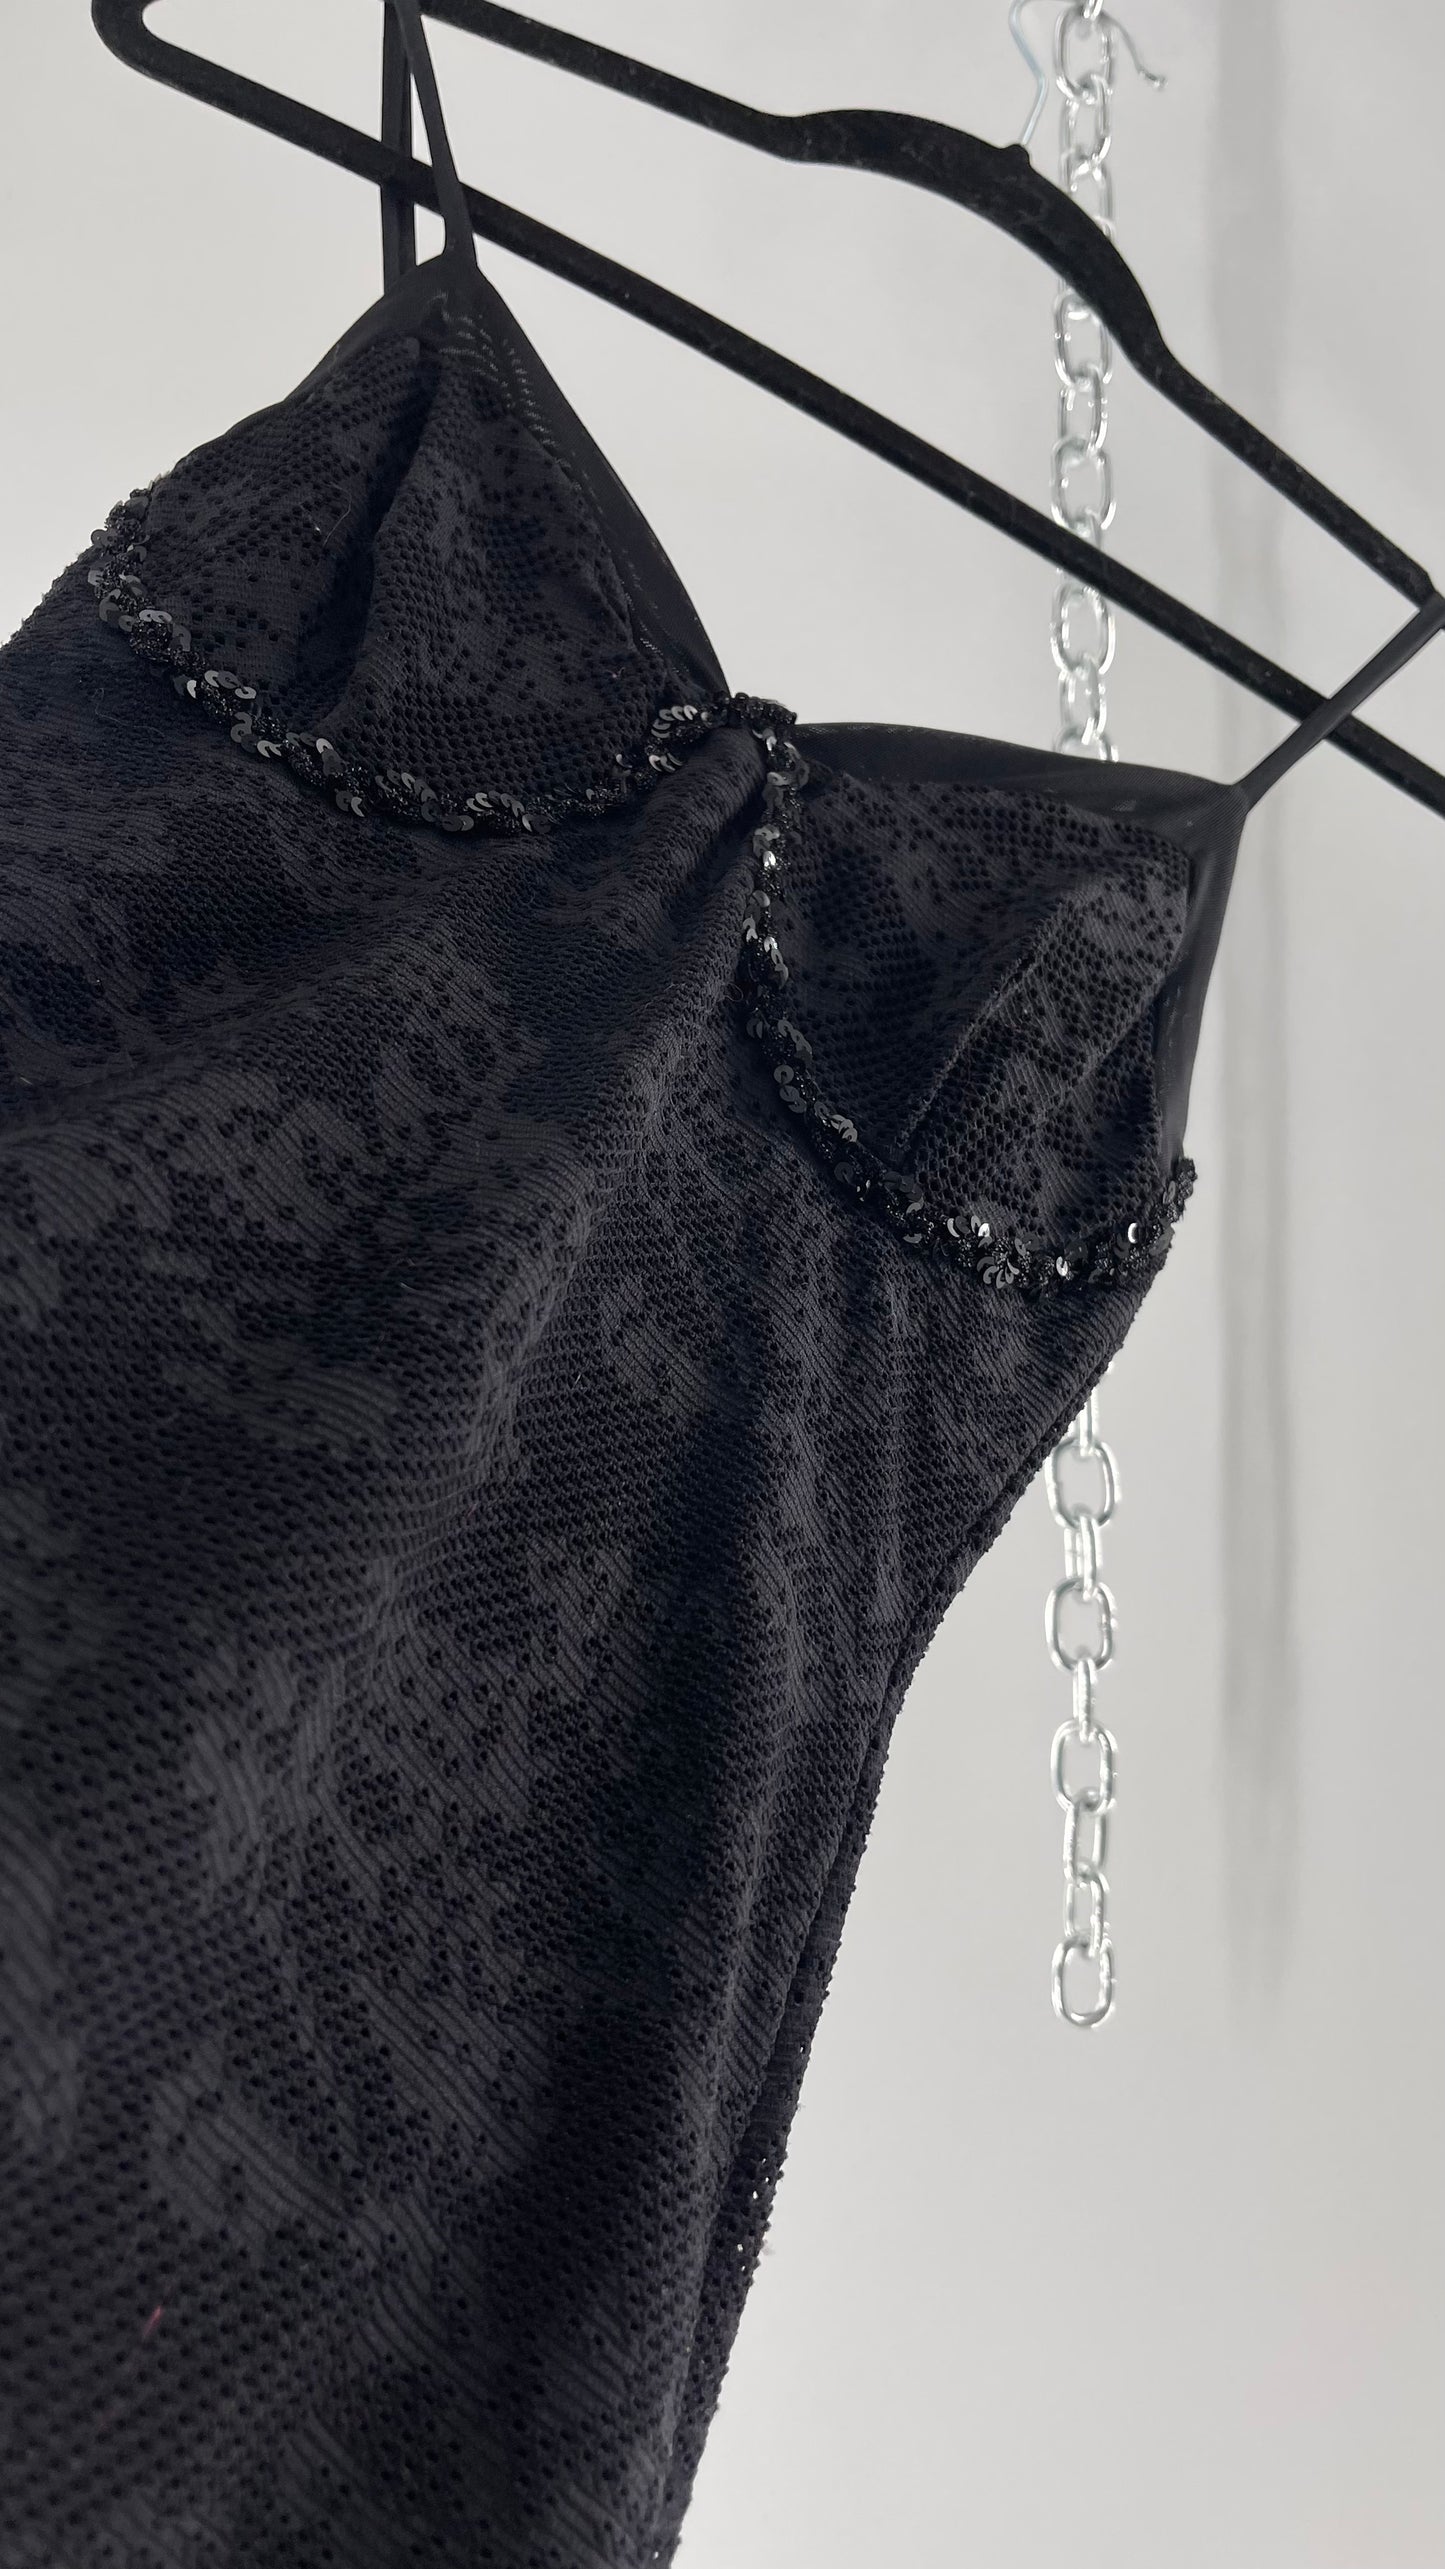 Vintage Black Lace Bodycon Dress with Sequin Underbust Detailing (XS)